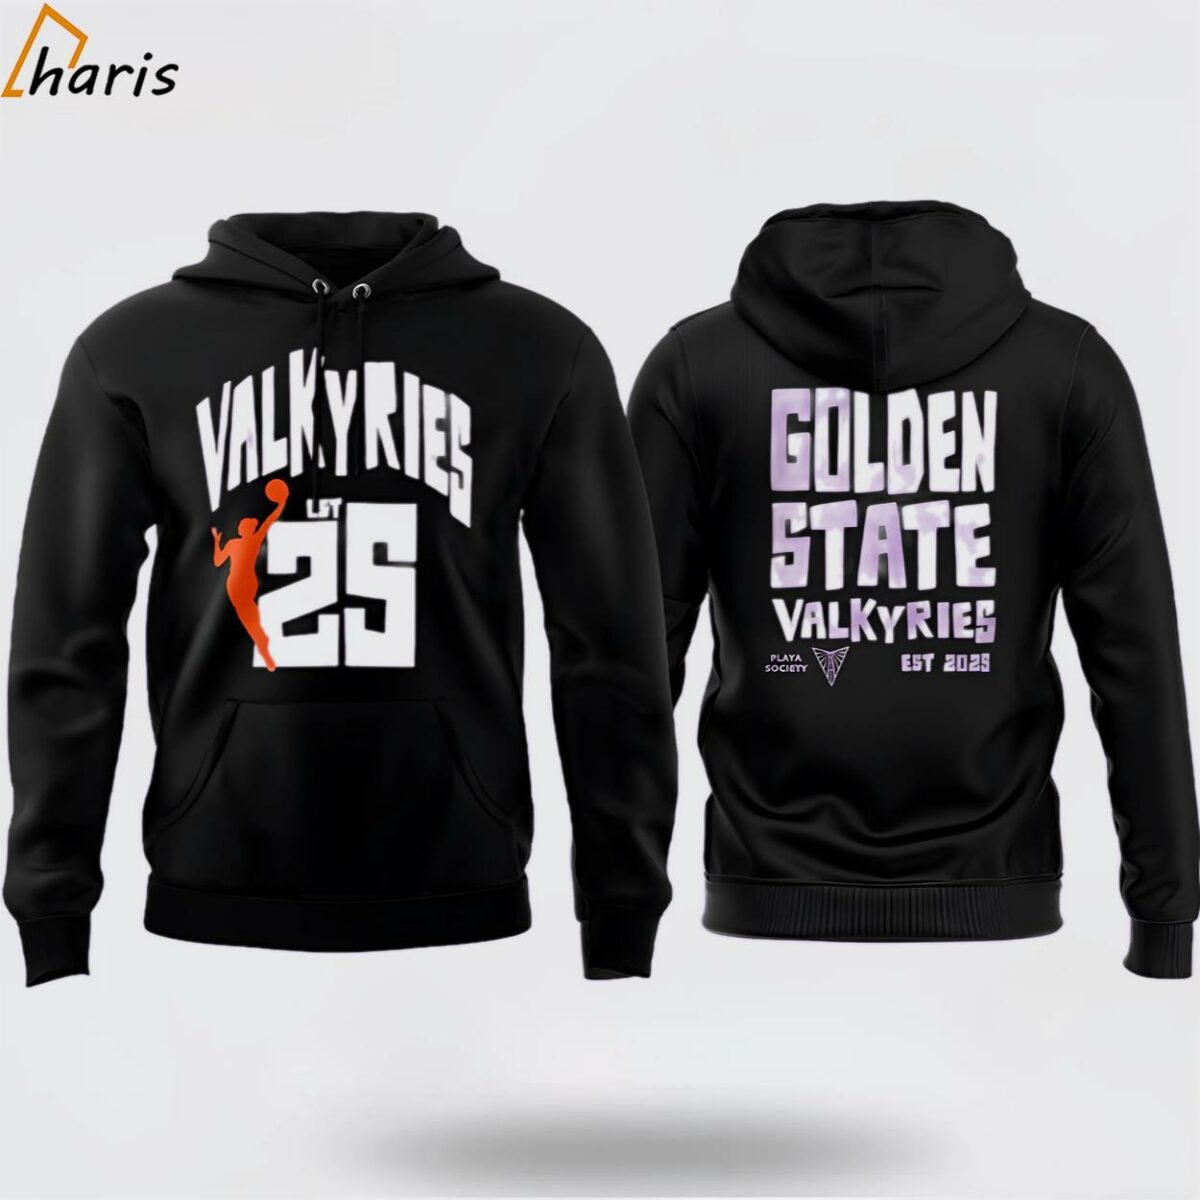 Golden State Valkyries Est 2025 3D Hoodie 1 jersey